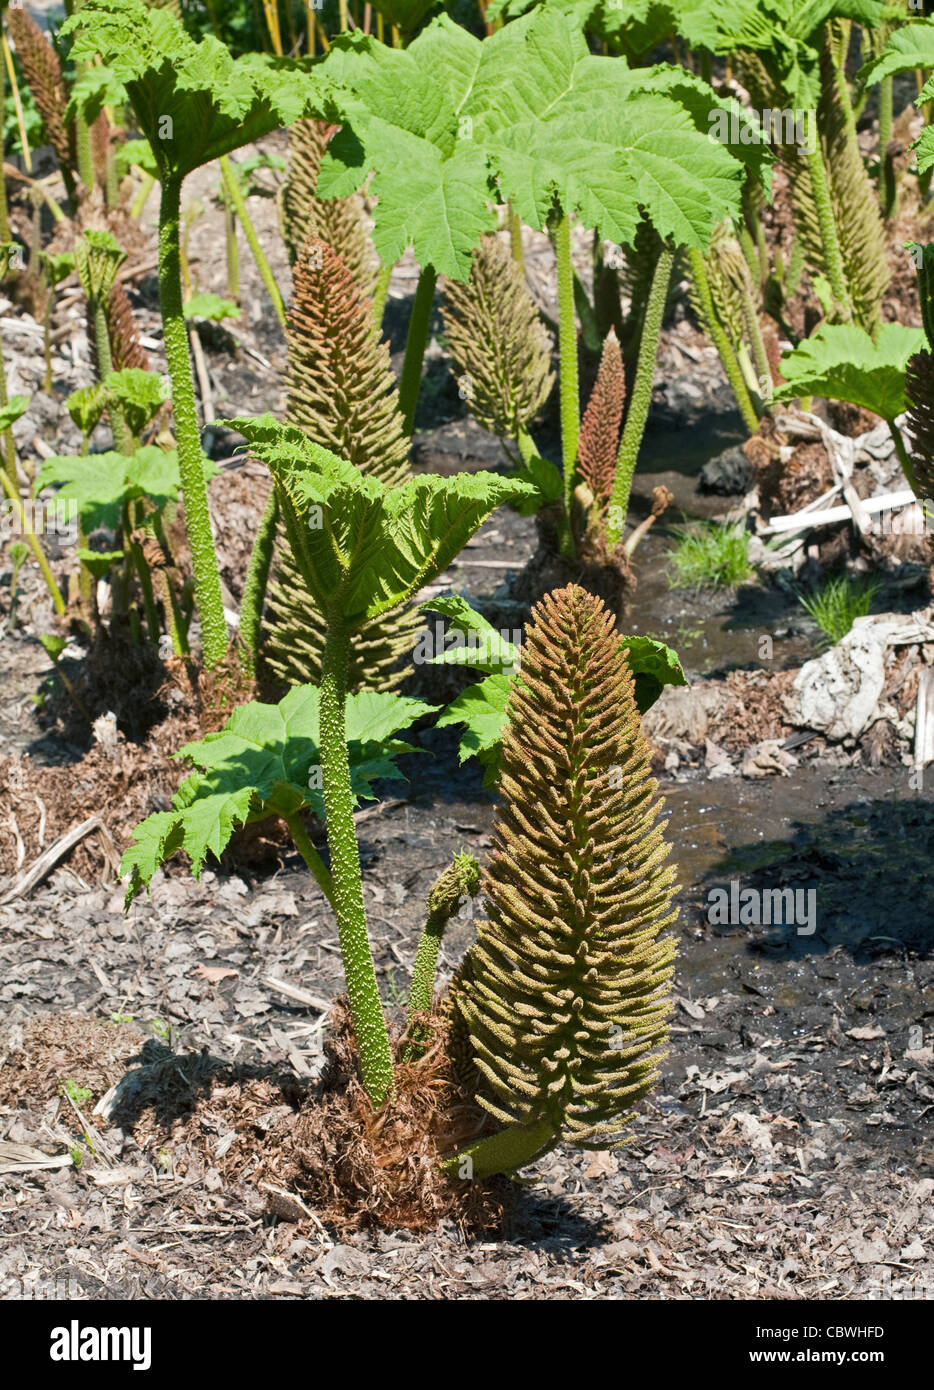 Gunnera Manicata (Brazilian Giant Rhubarb) Stock Photo